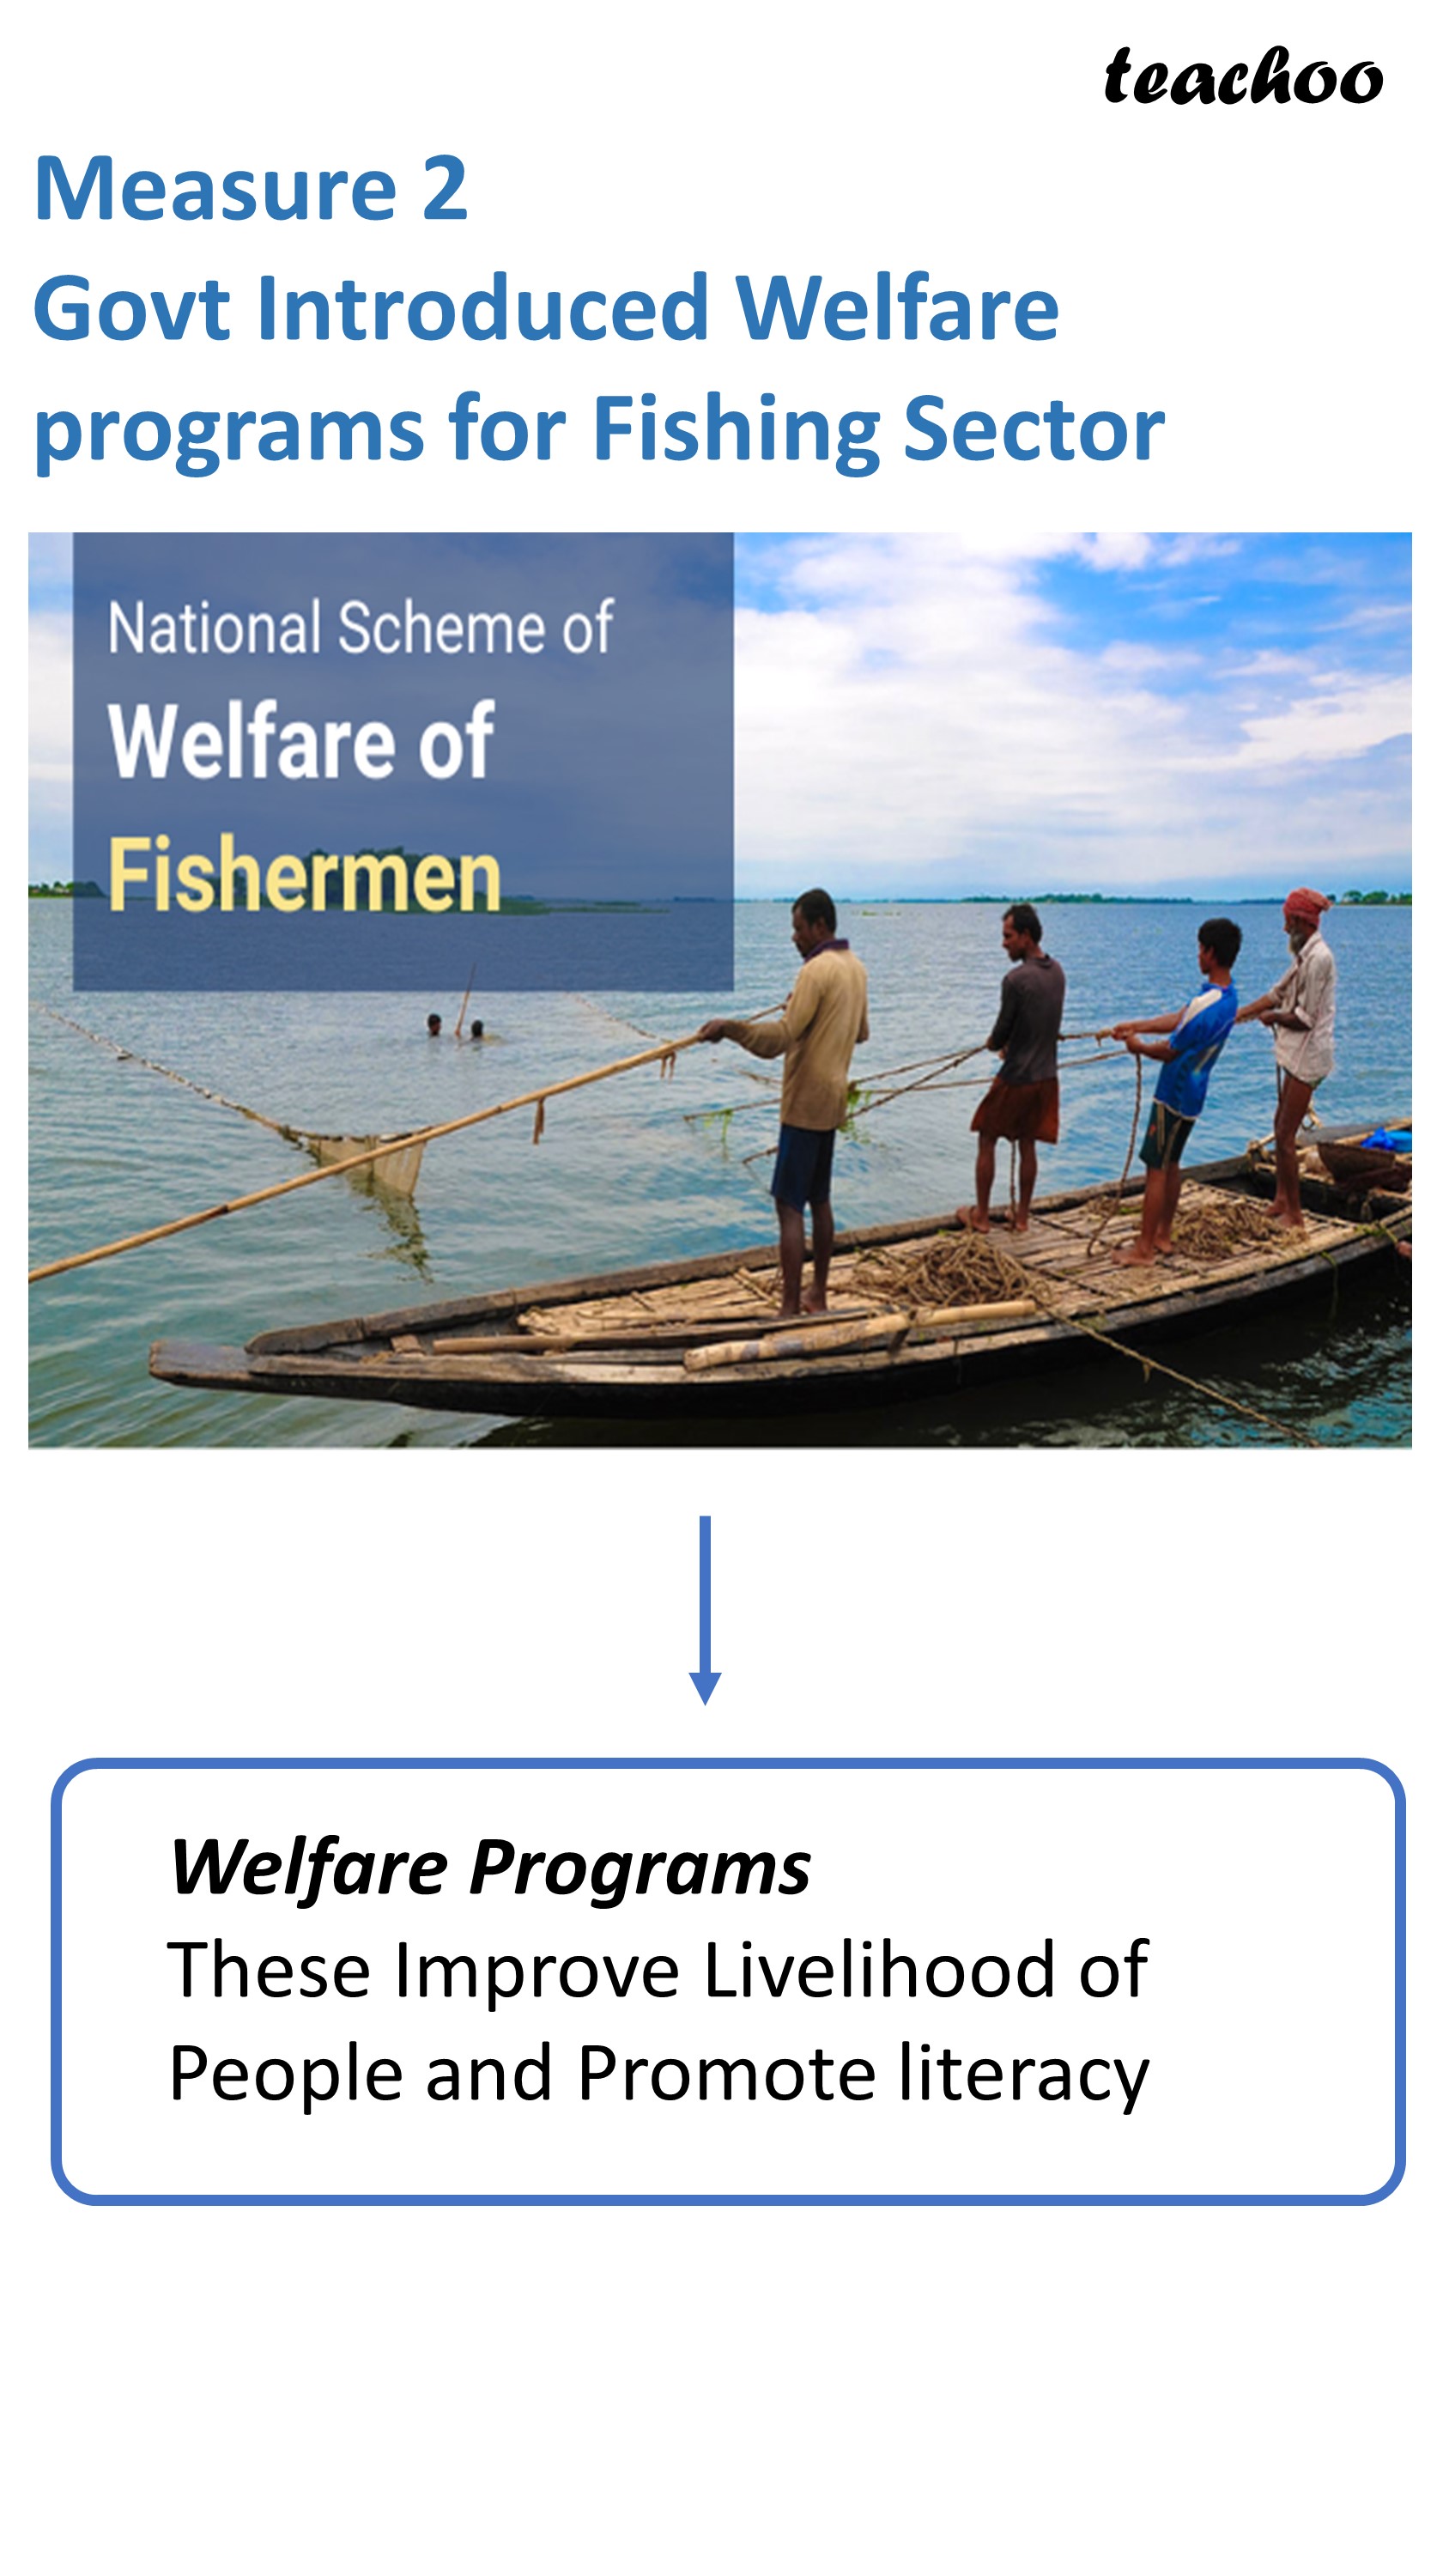 Measure 2 Govt Introduced Welfare programs for Fishing Sector - Teachoo.JPG